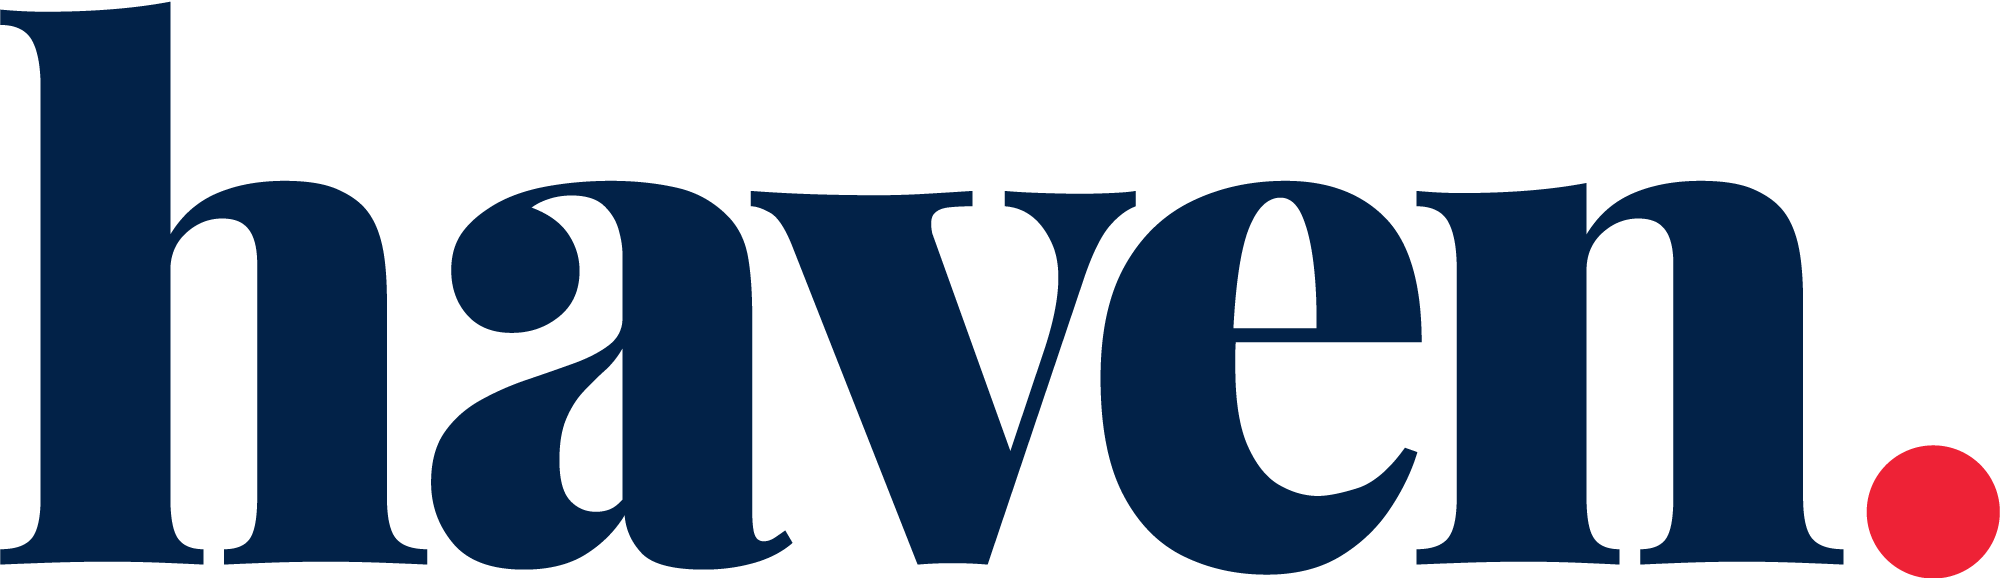 Haven Residential logo